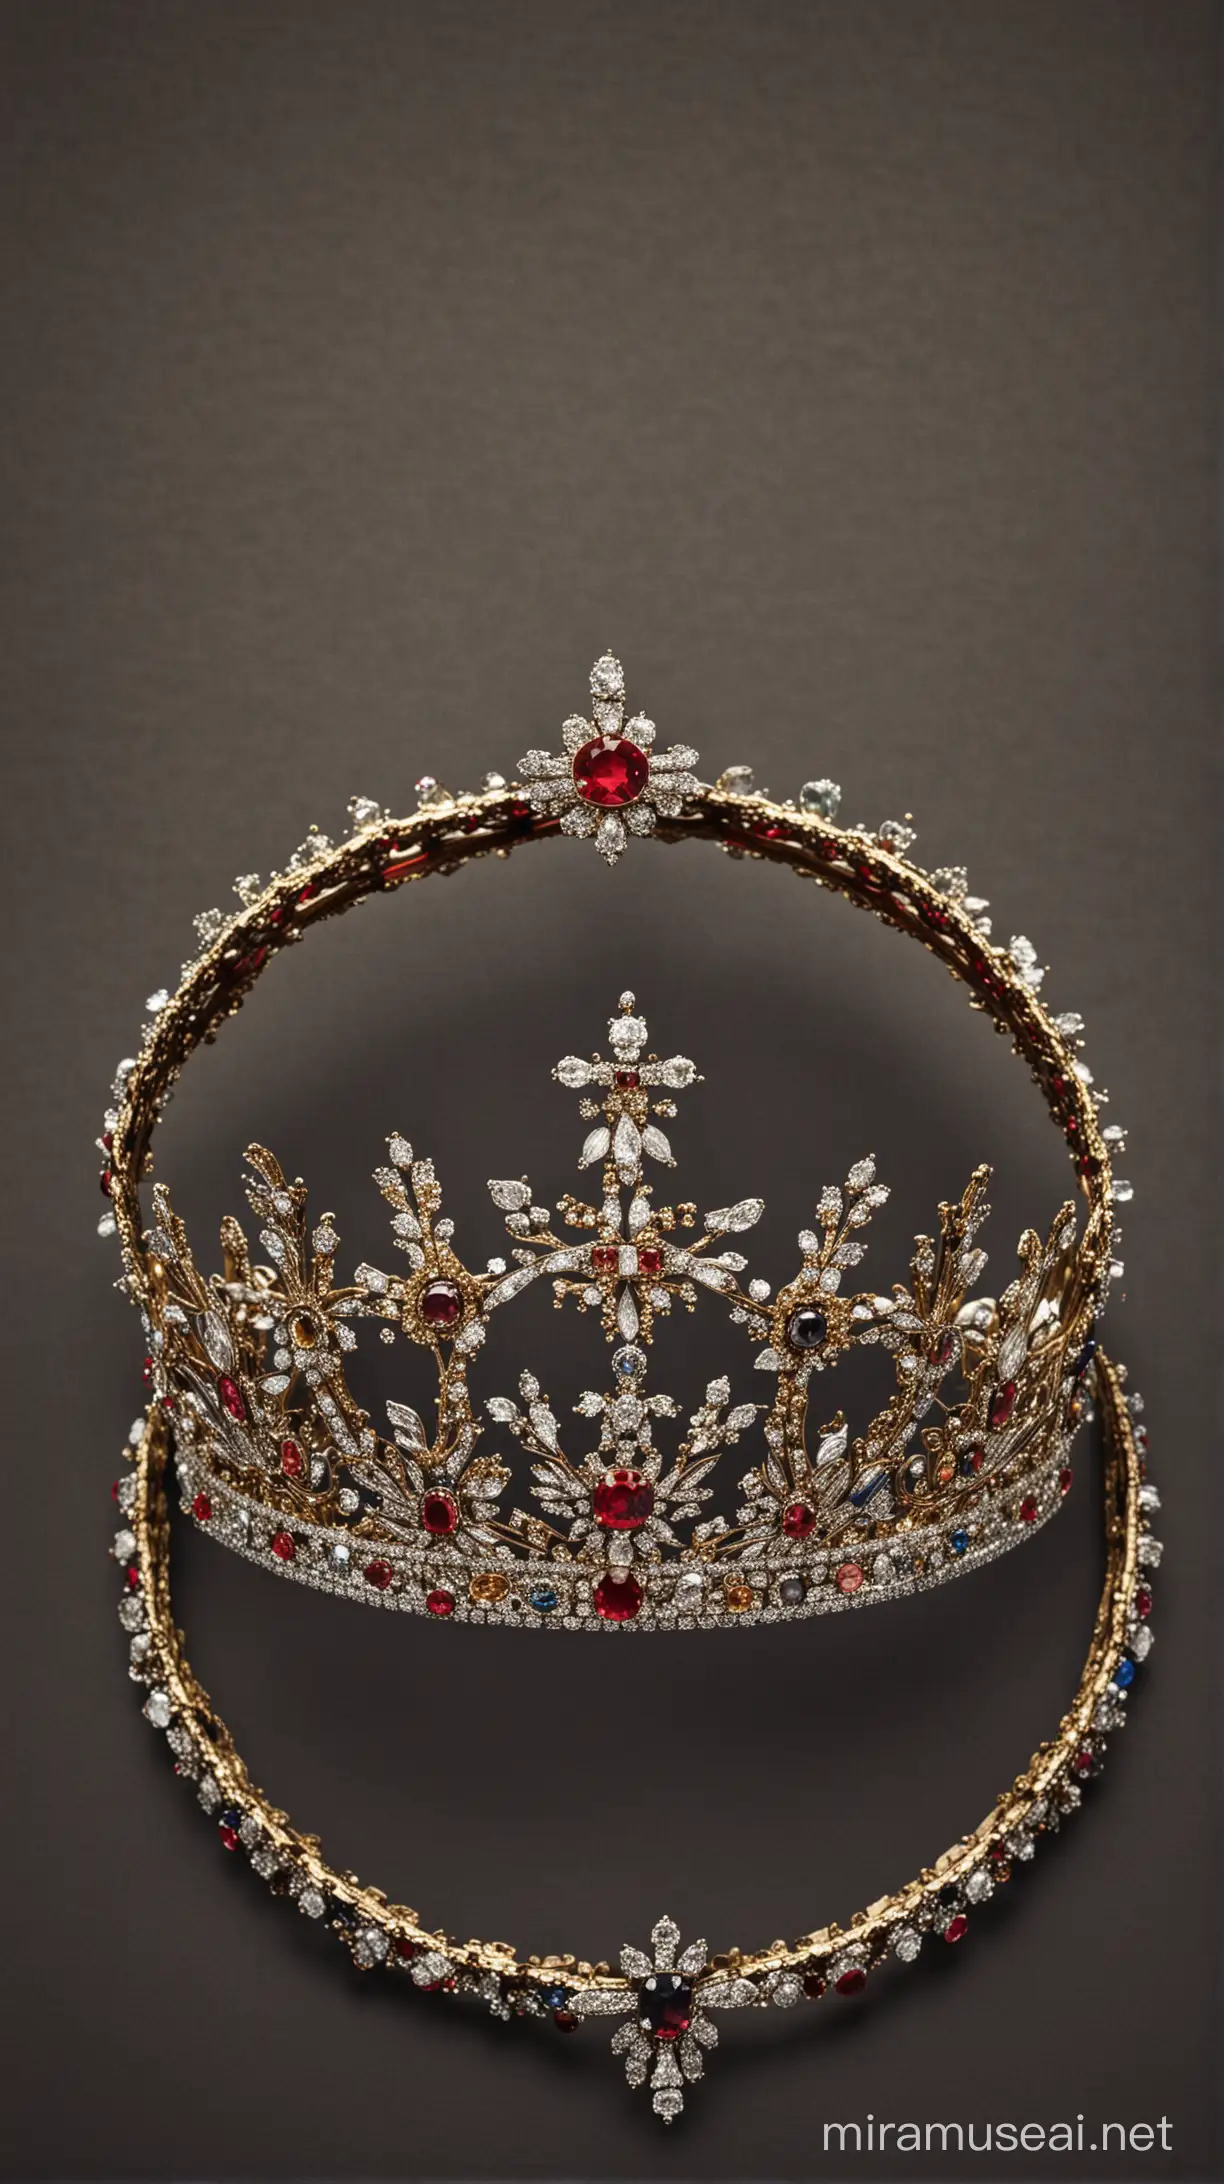 Regal Queen Wearing a Crown of Jewels